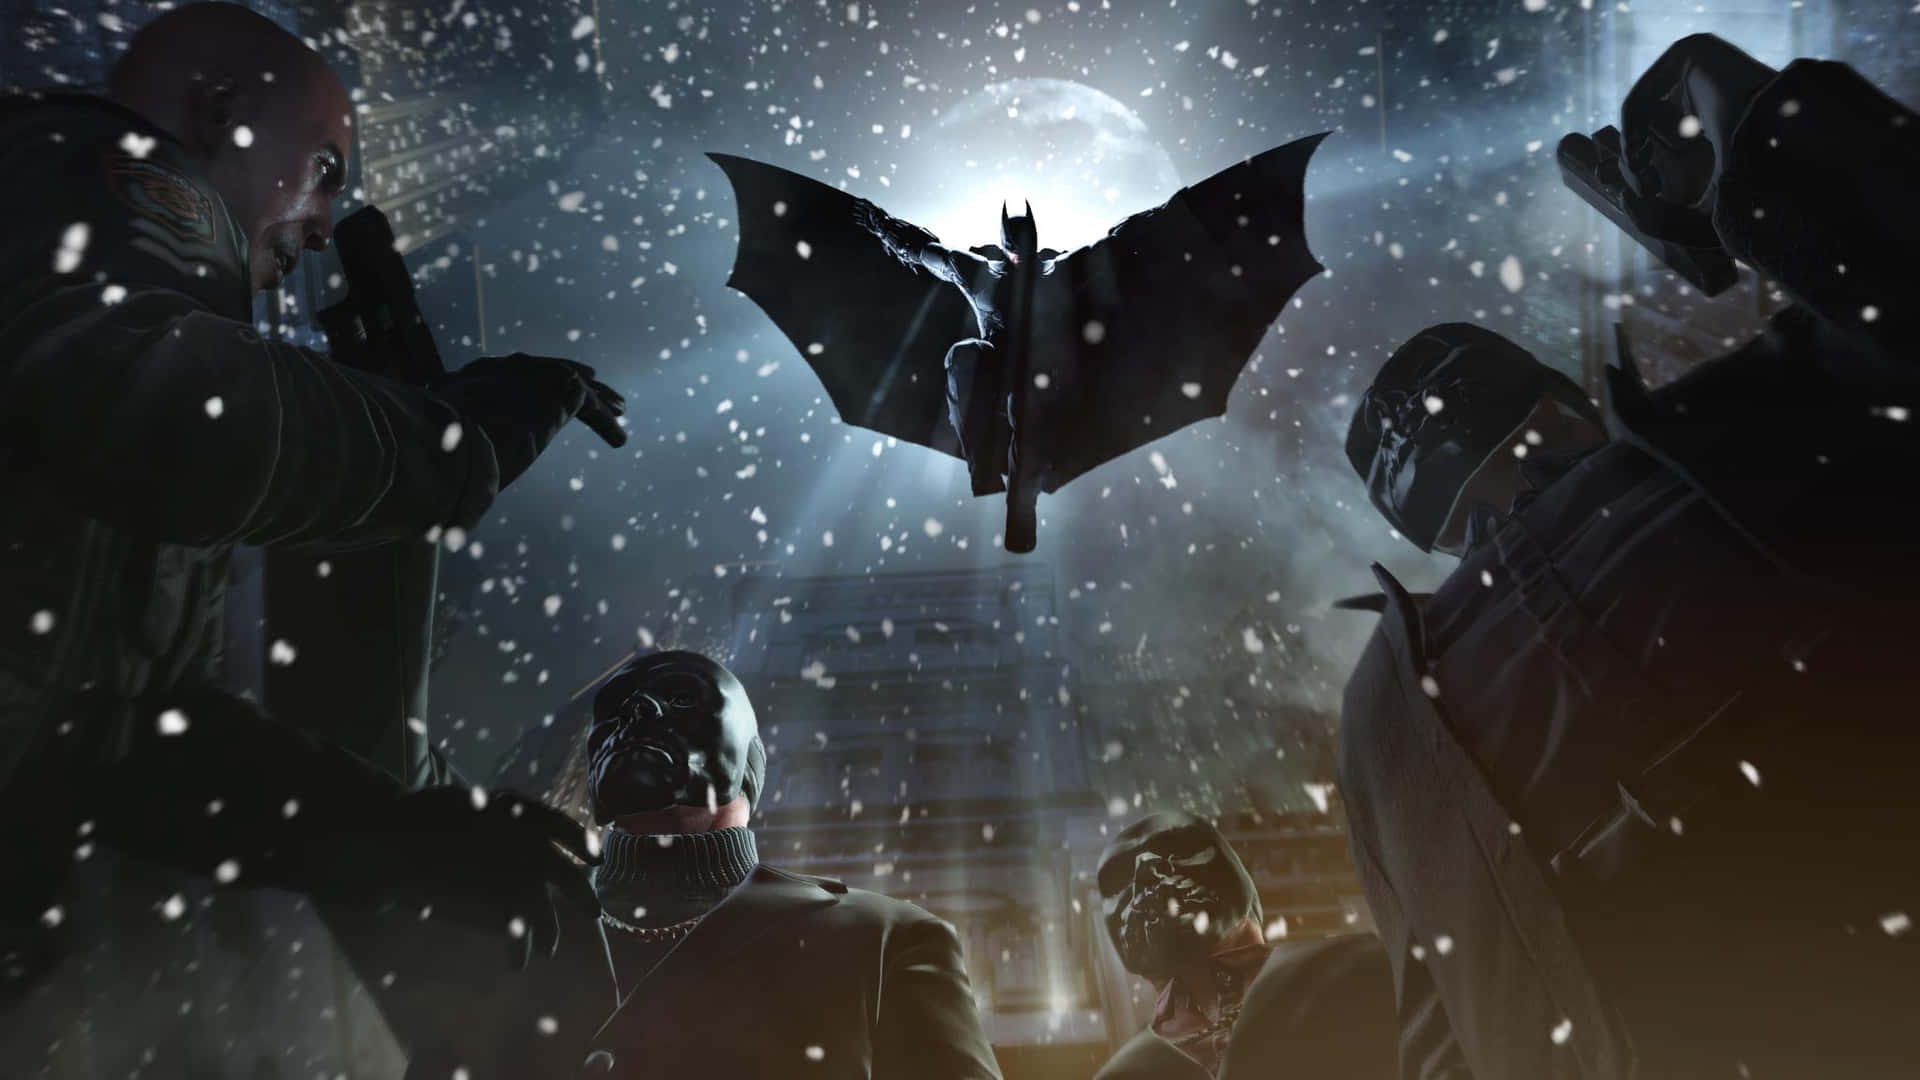 The Dark Knight fights for justice in Batman Arkham Origins Wallpaper